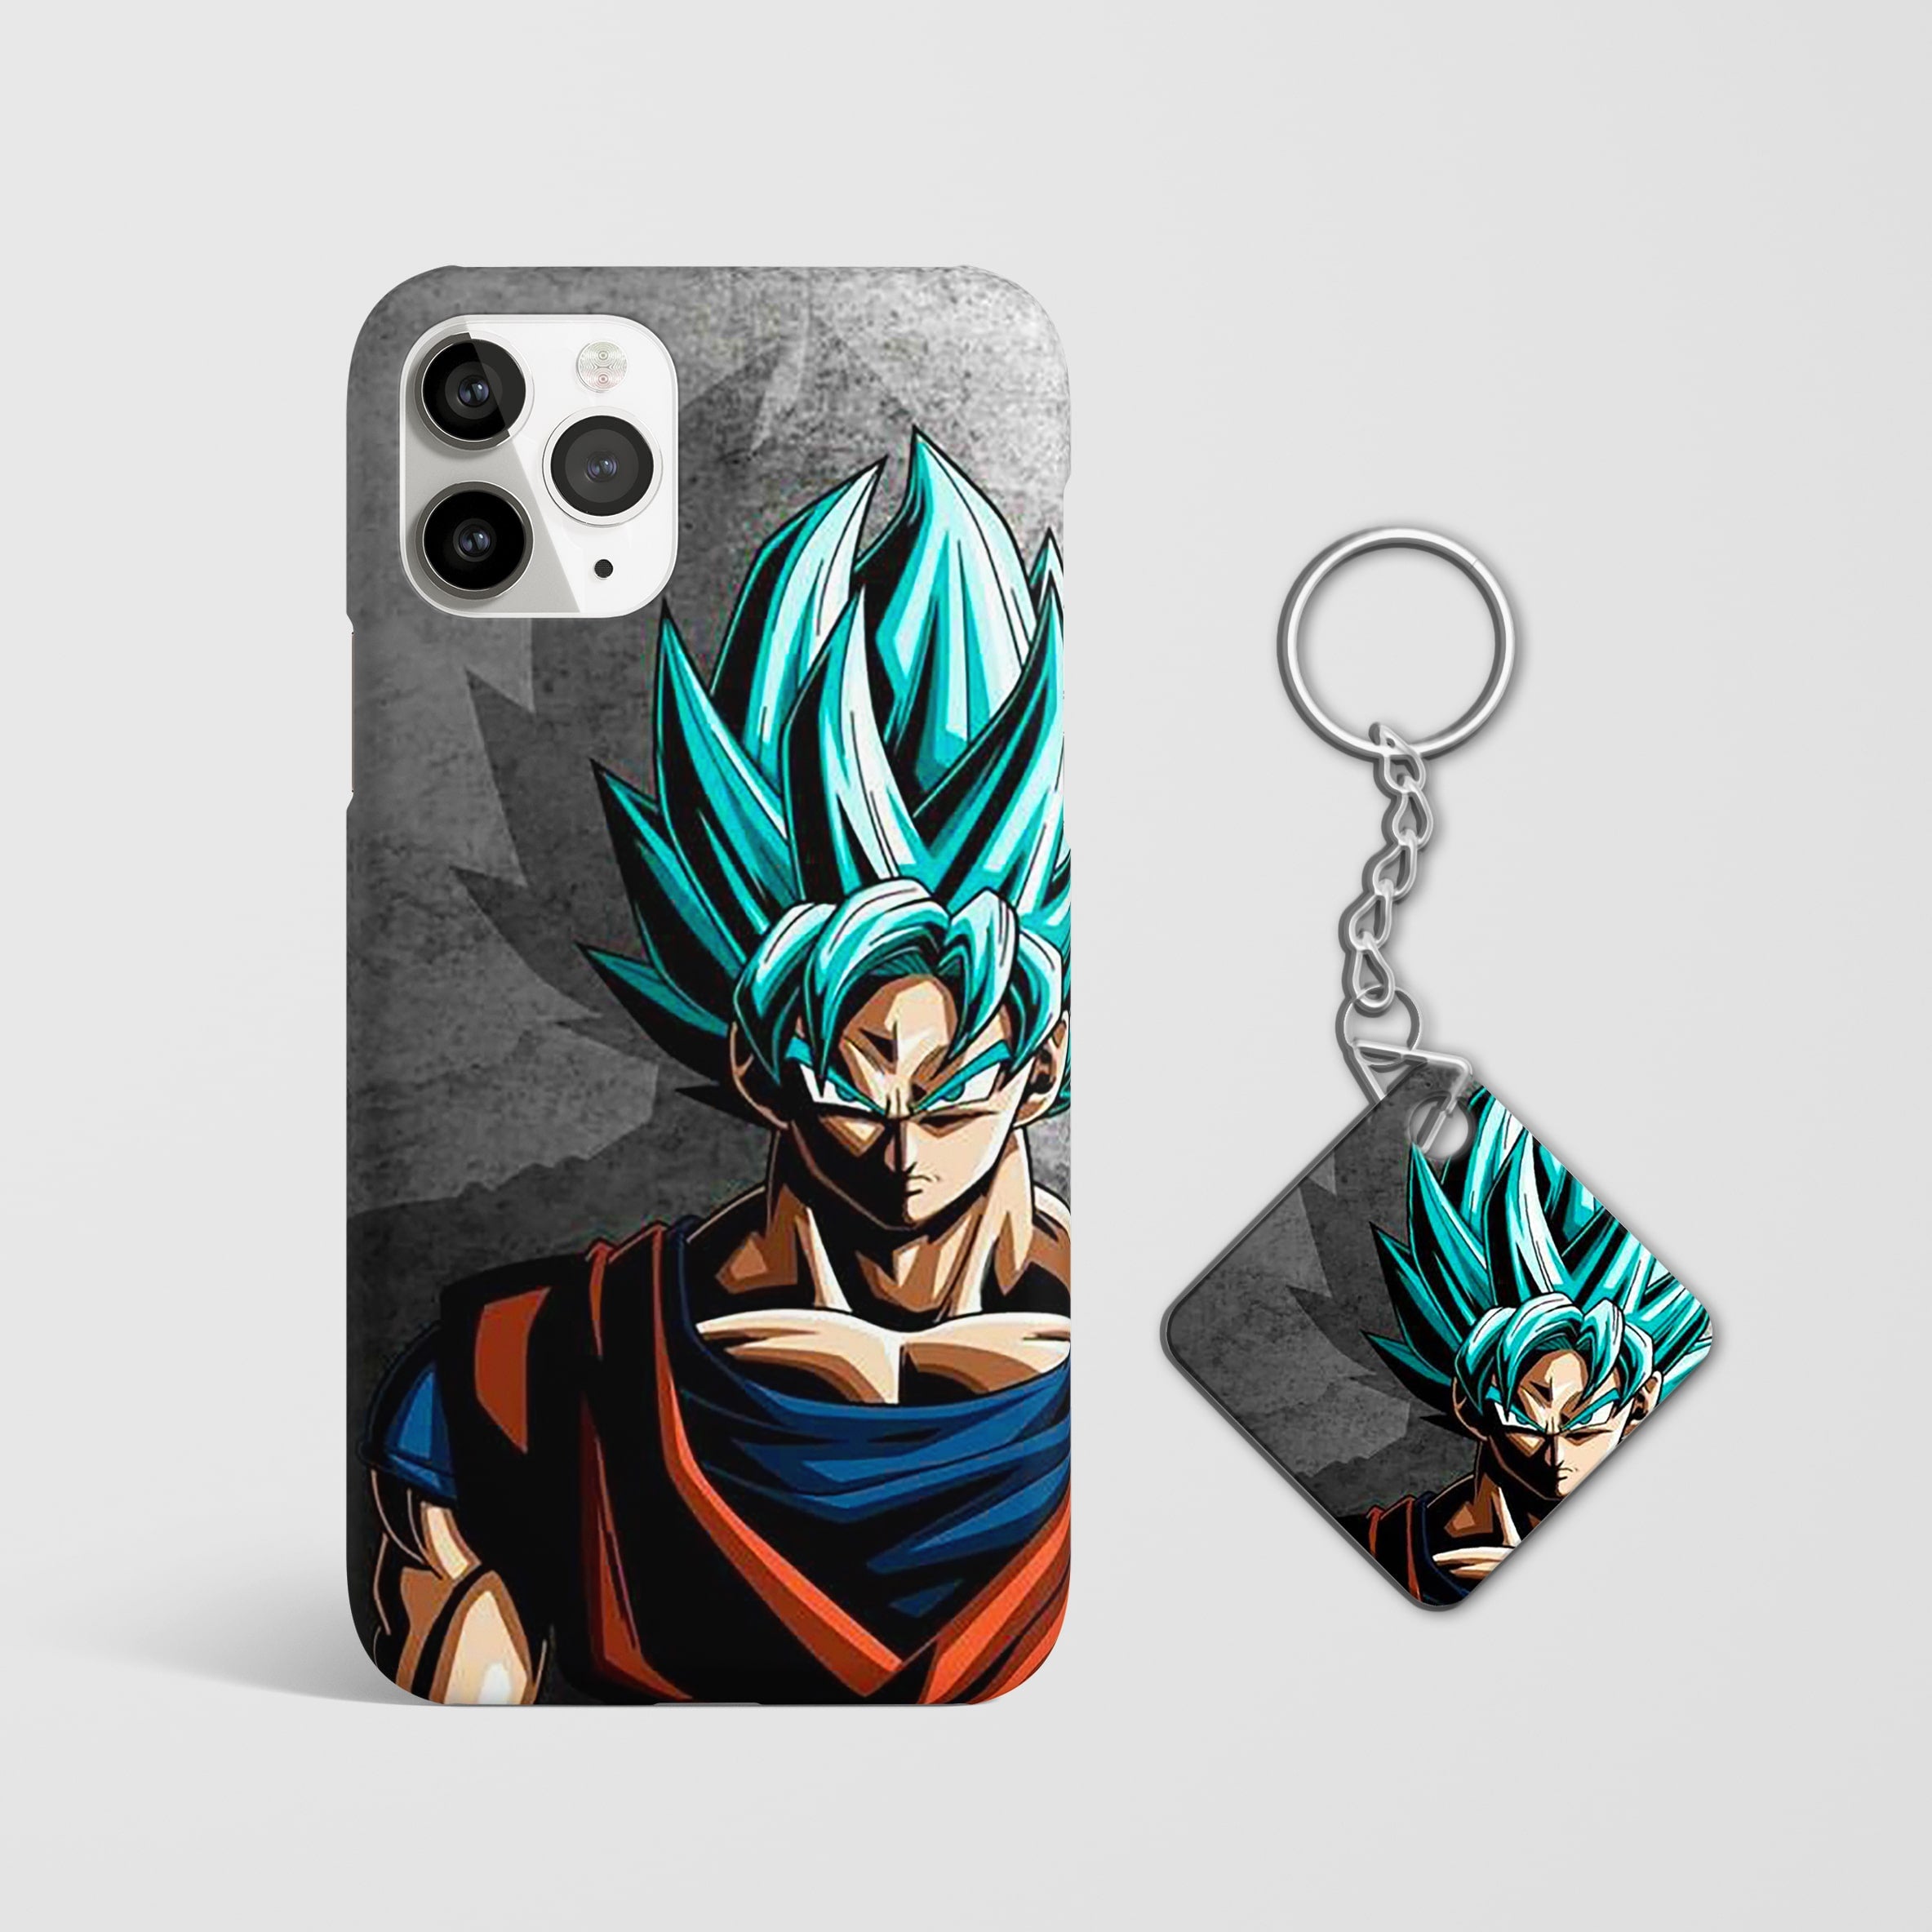 Close-up of Goku's Super Saiyan transformation on phone case with Keychain.